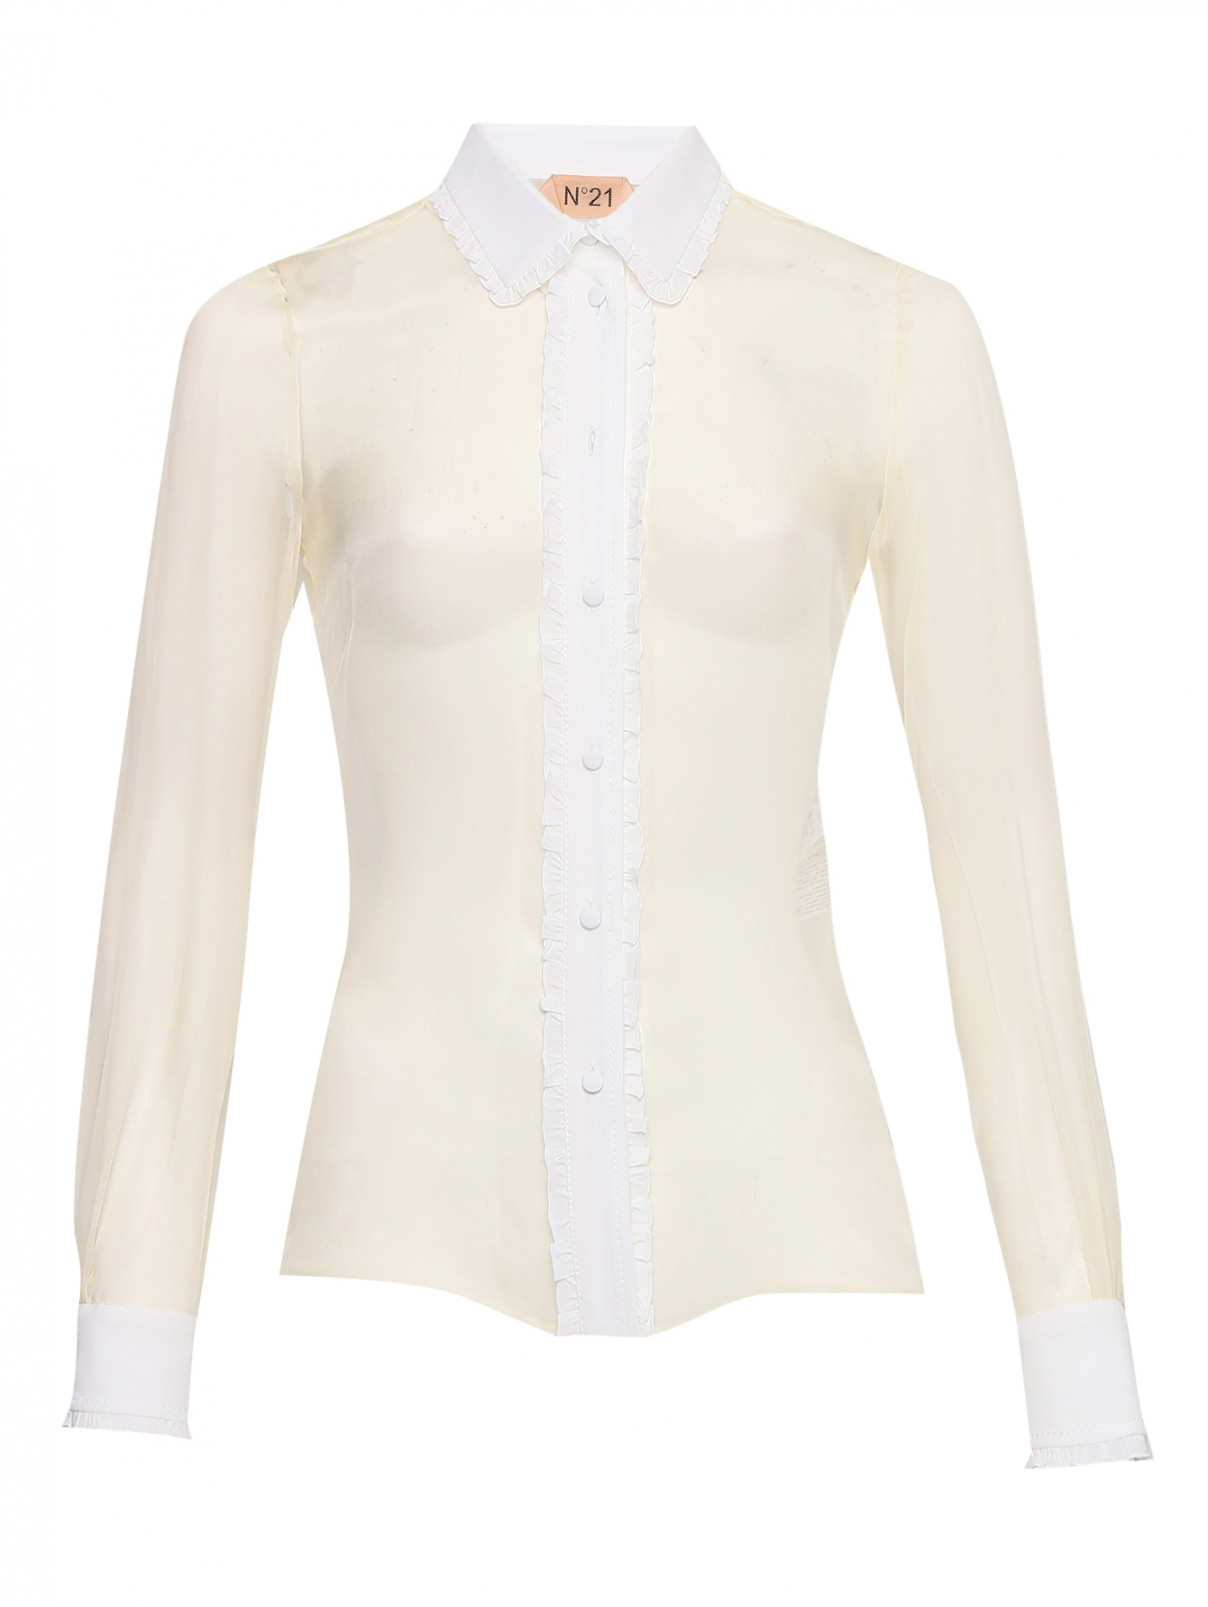 Блуза из шелка на пуговицах N21  –  Общий вид  – Цвет:  Бежевый